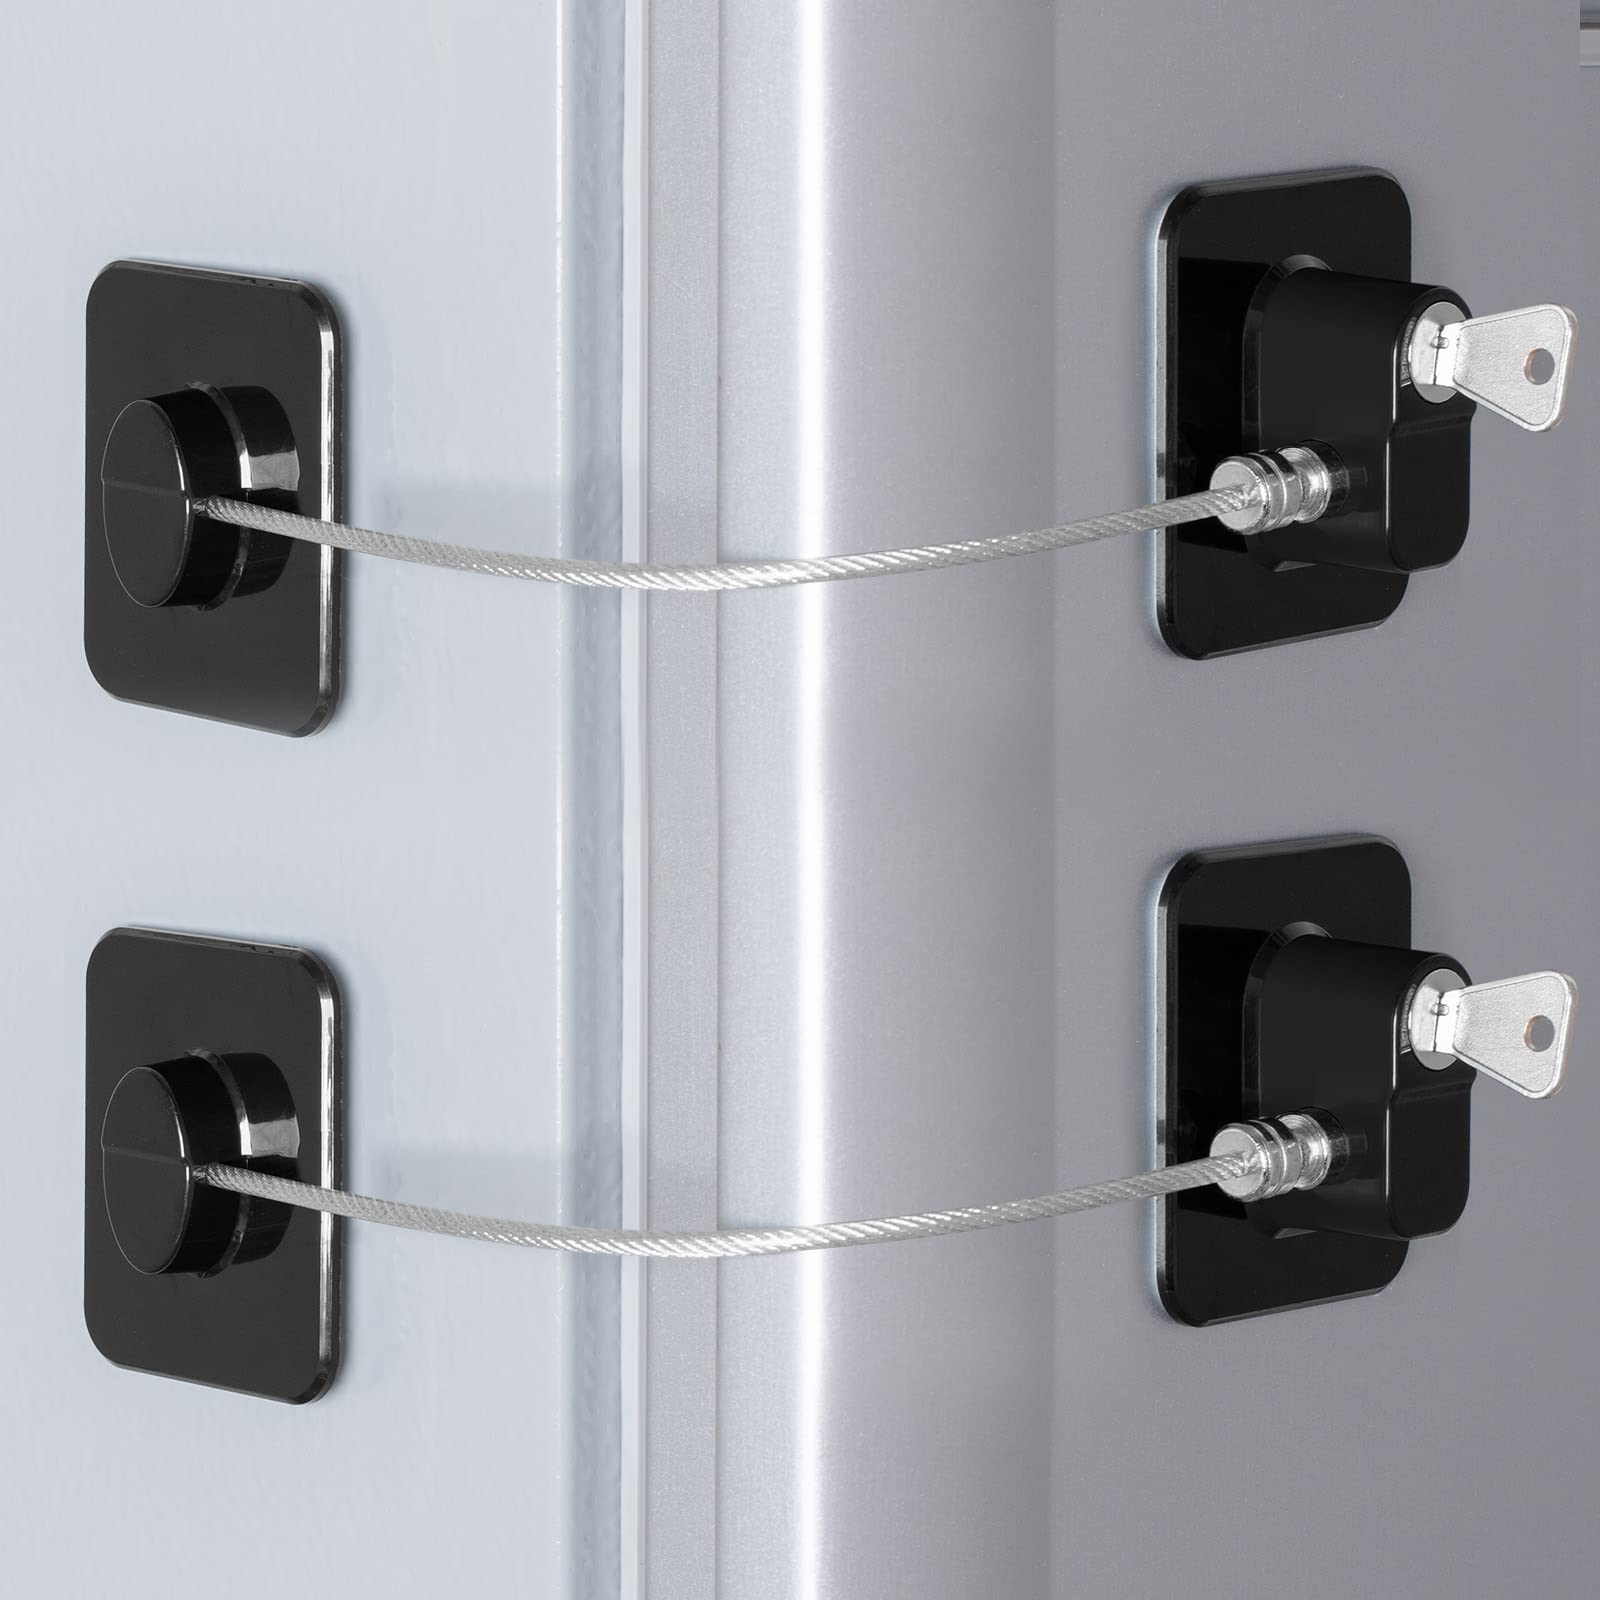 2 Pcs Fridge Lock, Refrigerator Lock for Children, Freezer Lock